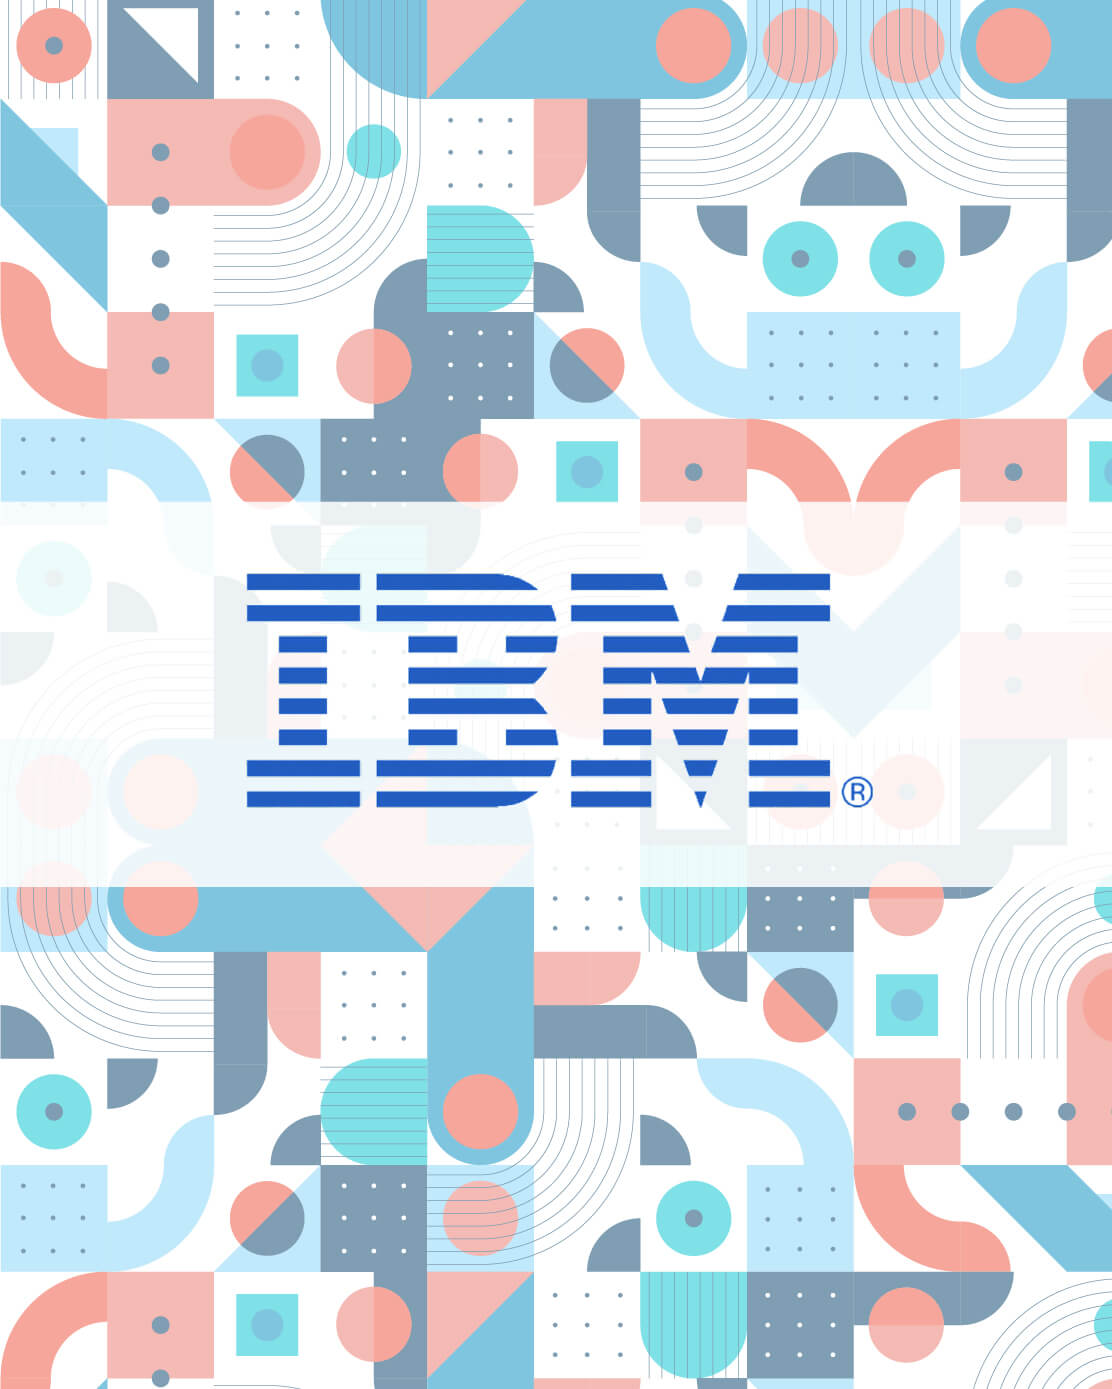 Info-graphics video for IBM